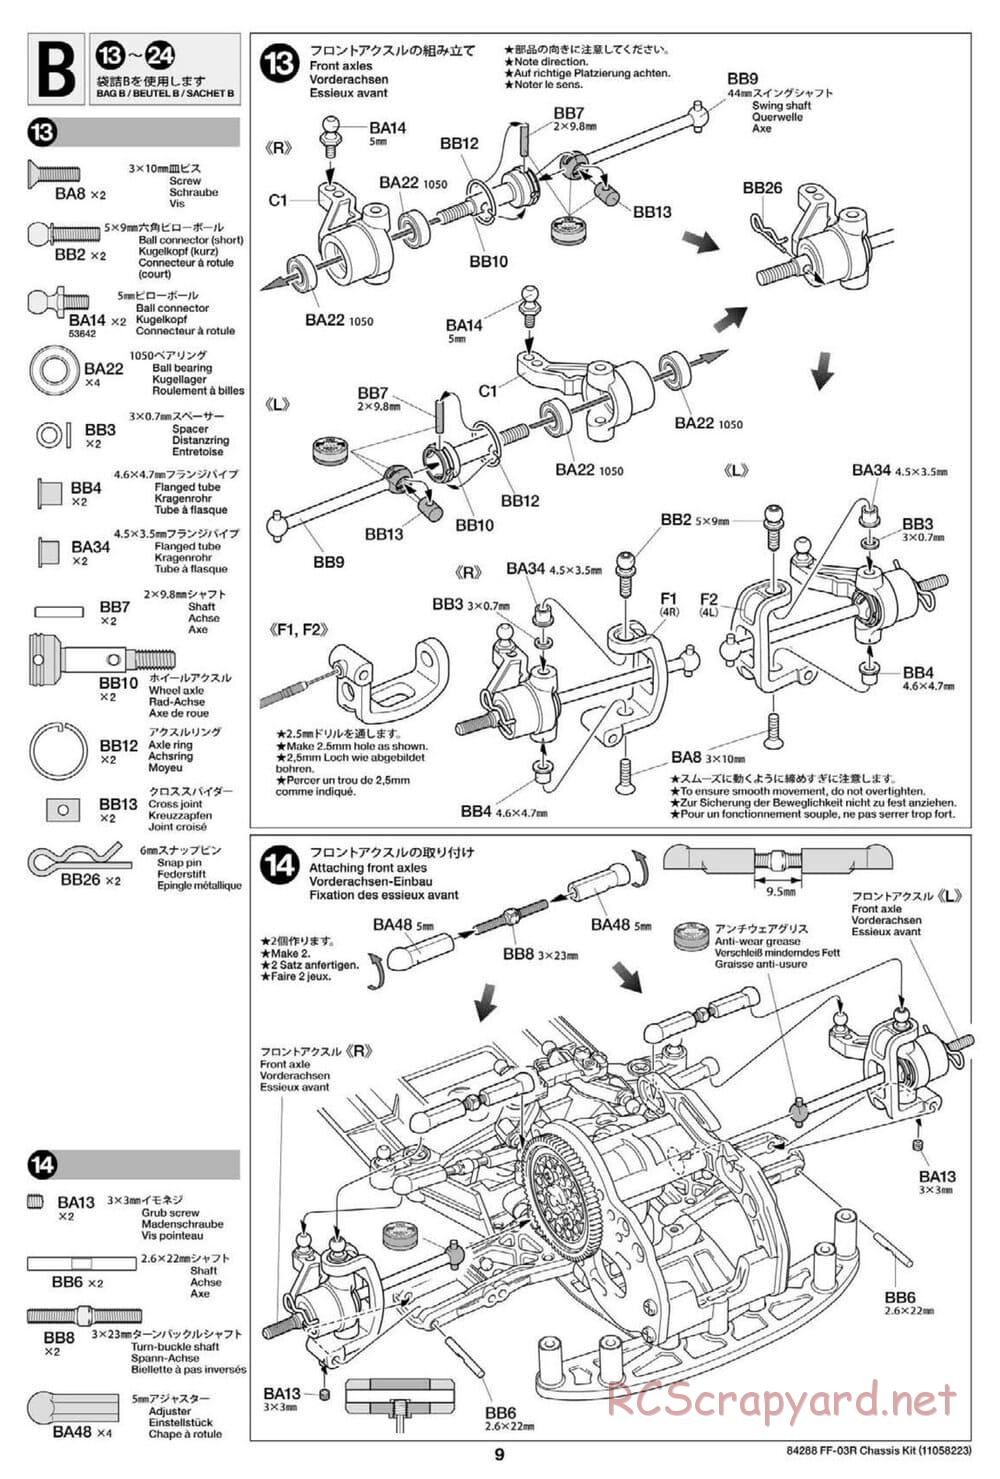 Tamiya - FF-03R Chassis - Manual - Page 11